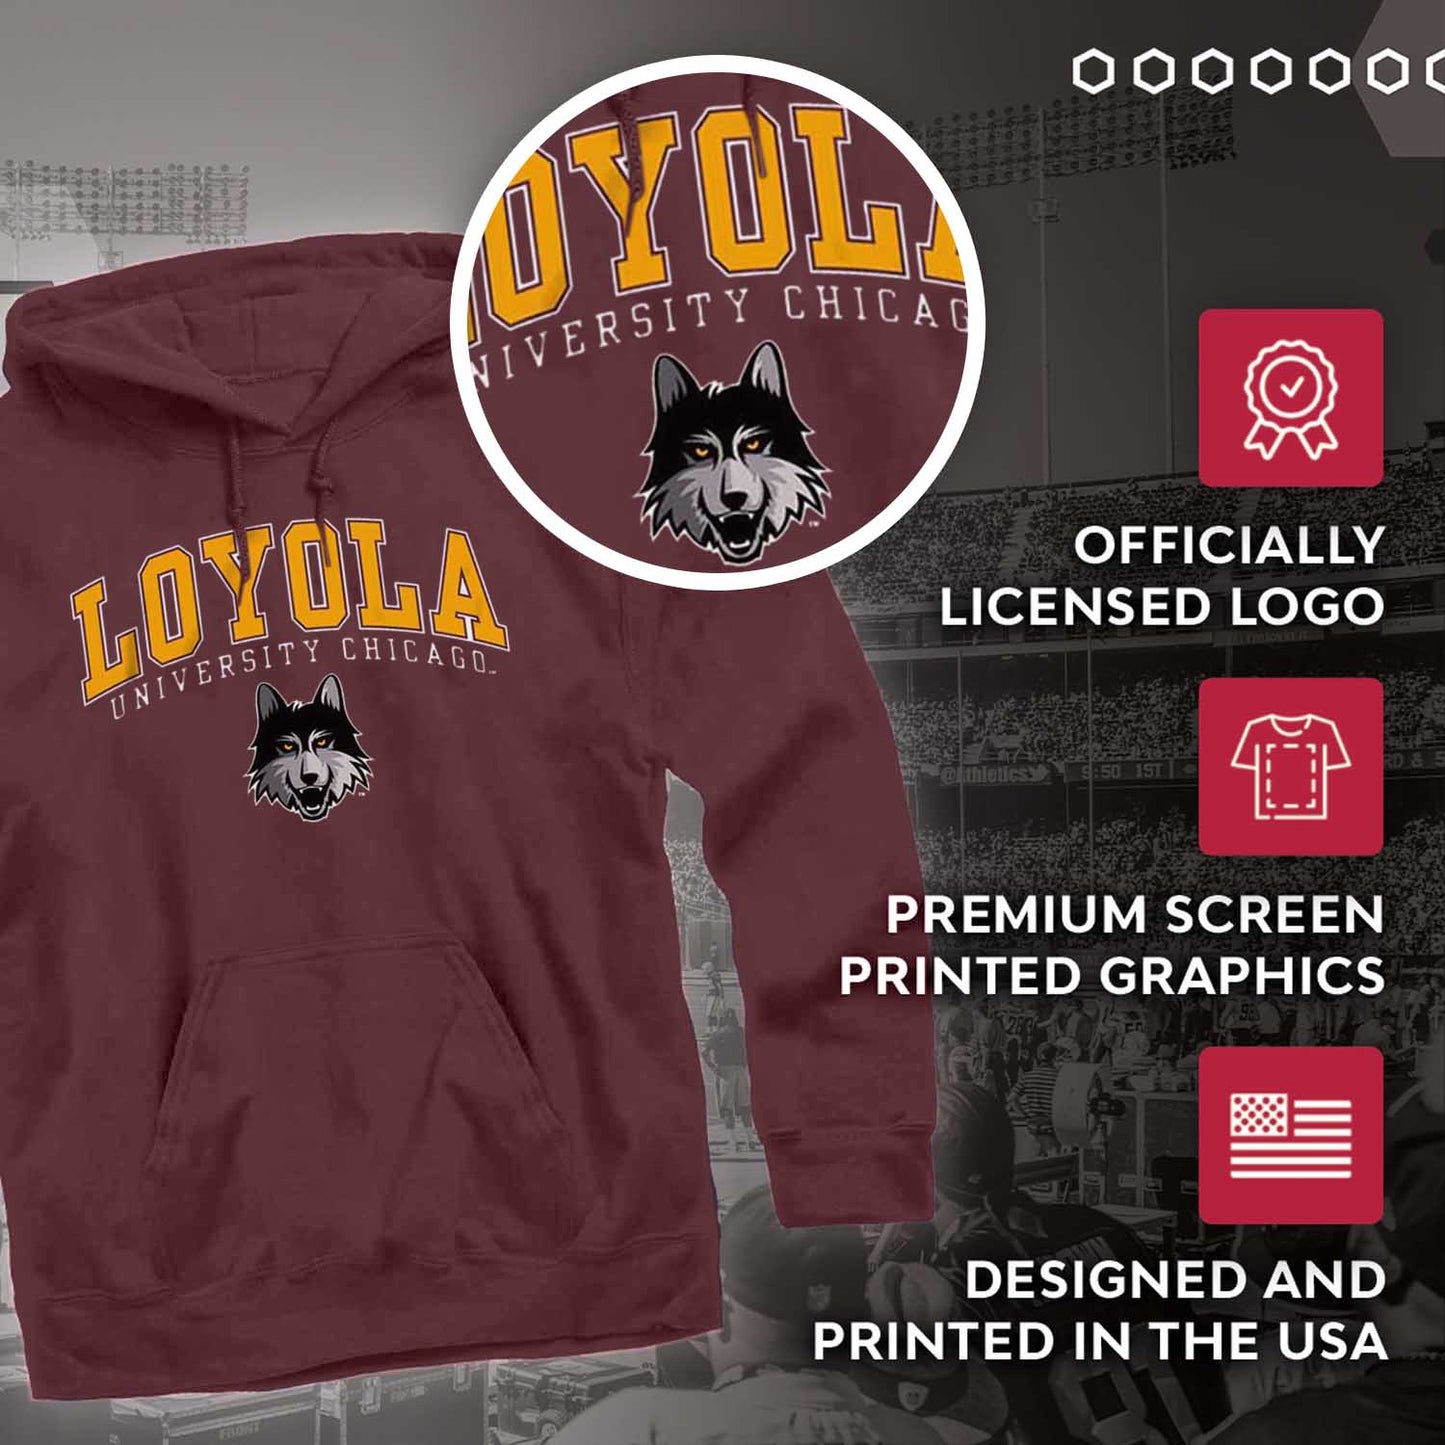 Loyola Chicago Ramblers Adult Arch & Logo Soft Style Gameday Hooded Sweatshirt - Maroon